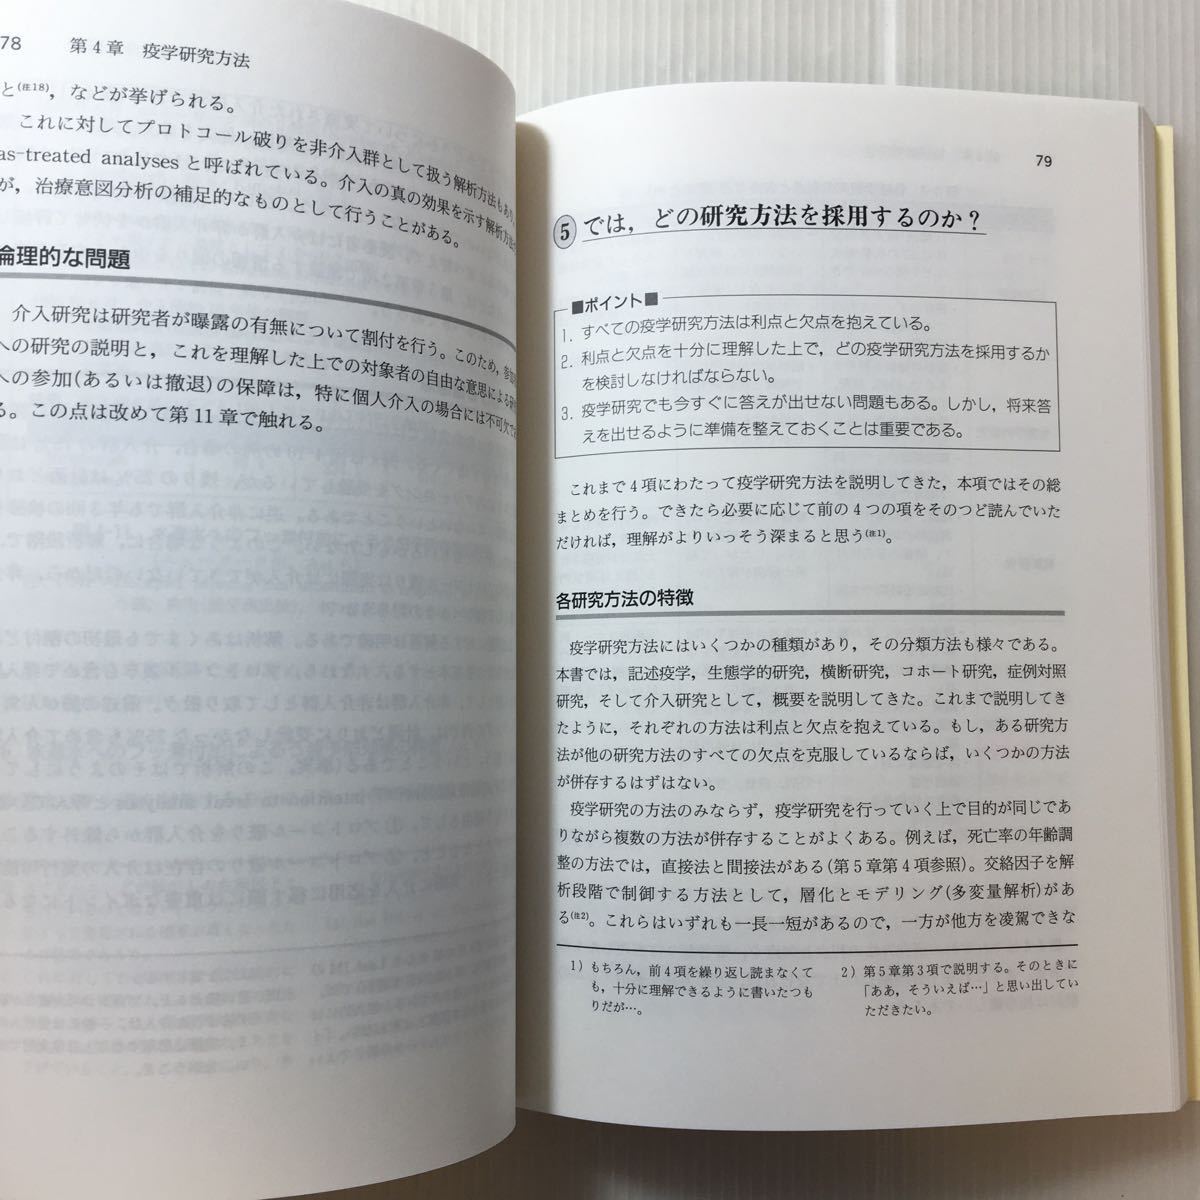 zaa-352♪基礎から学ぶ楽しい疫学 単行本 2005/12/1 中村 好一 (著)